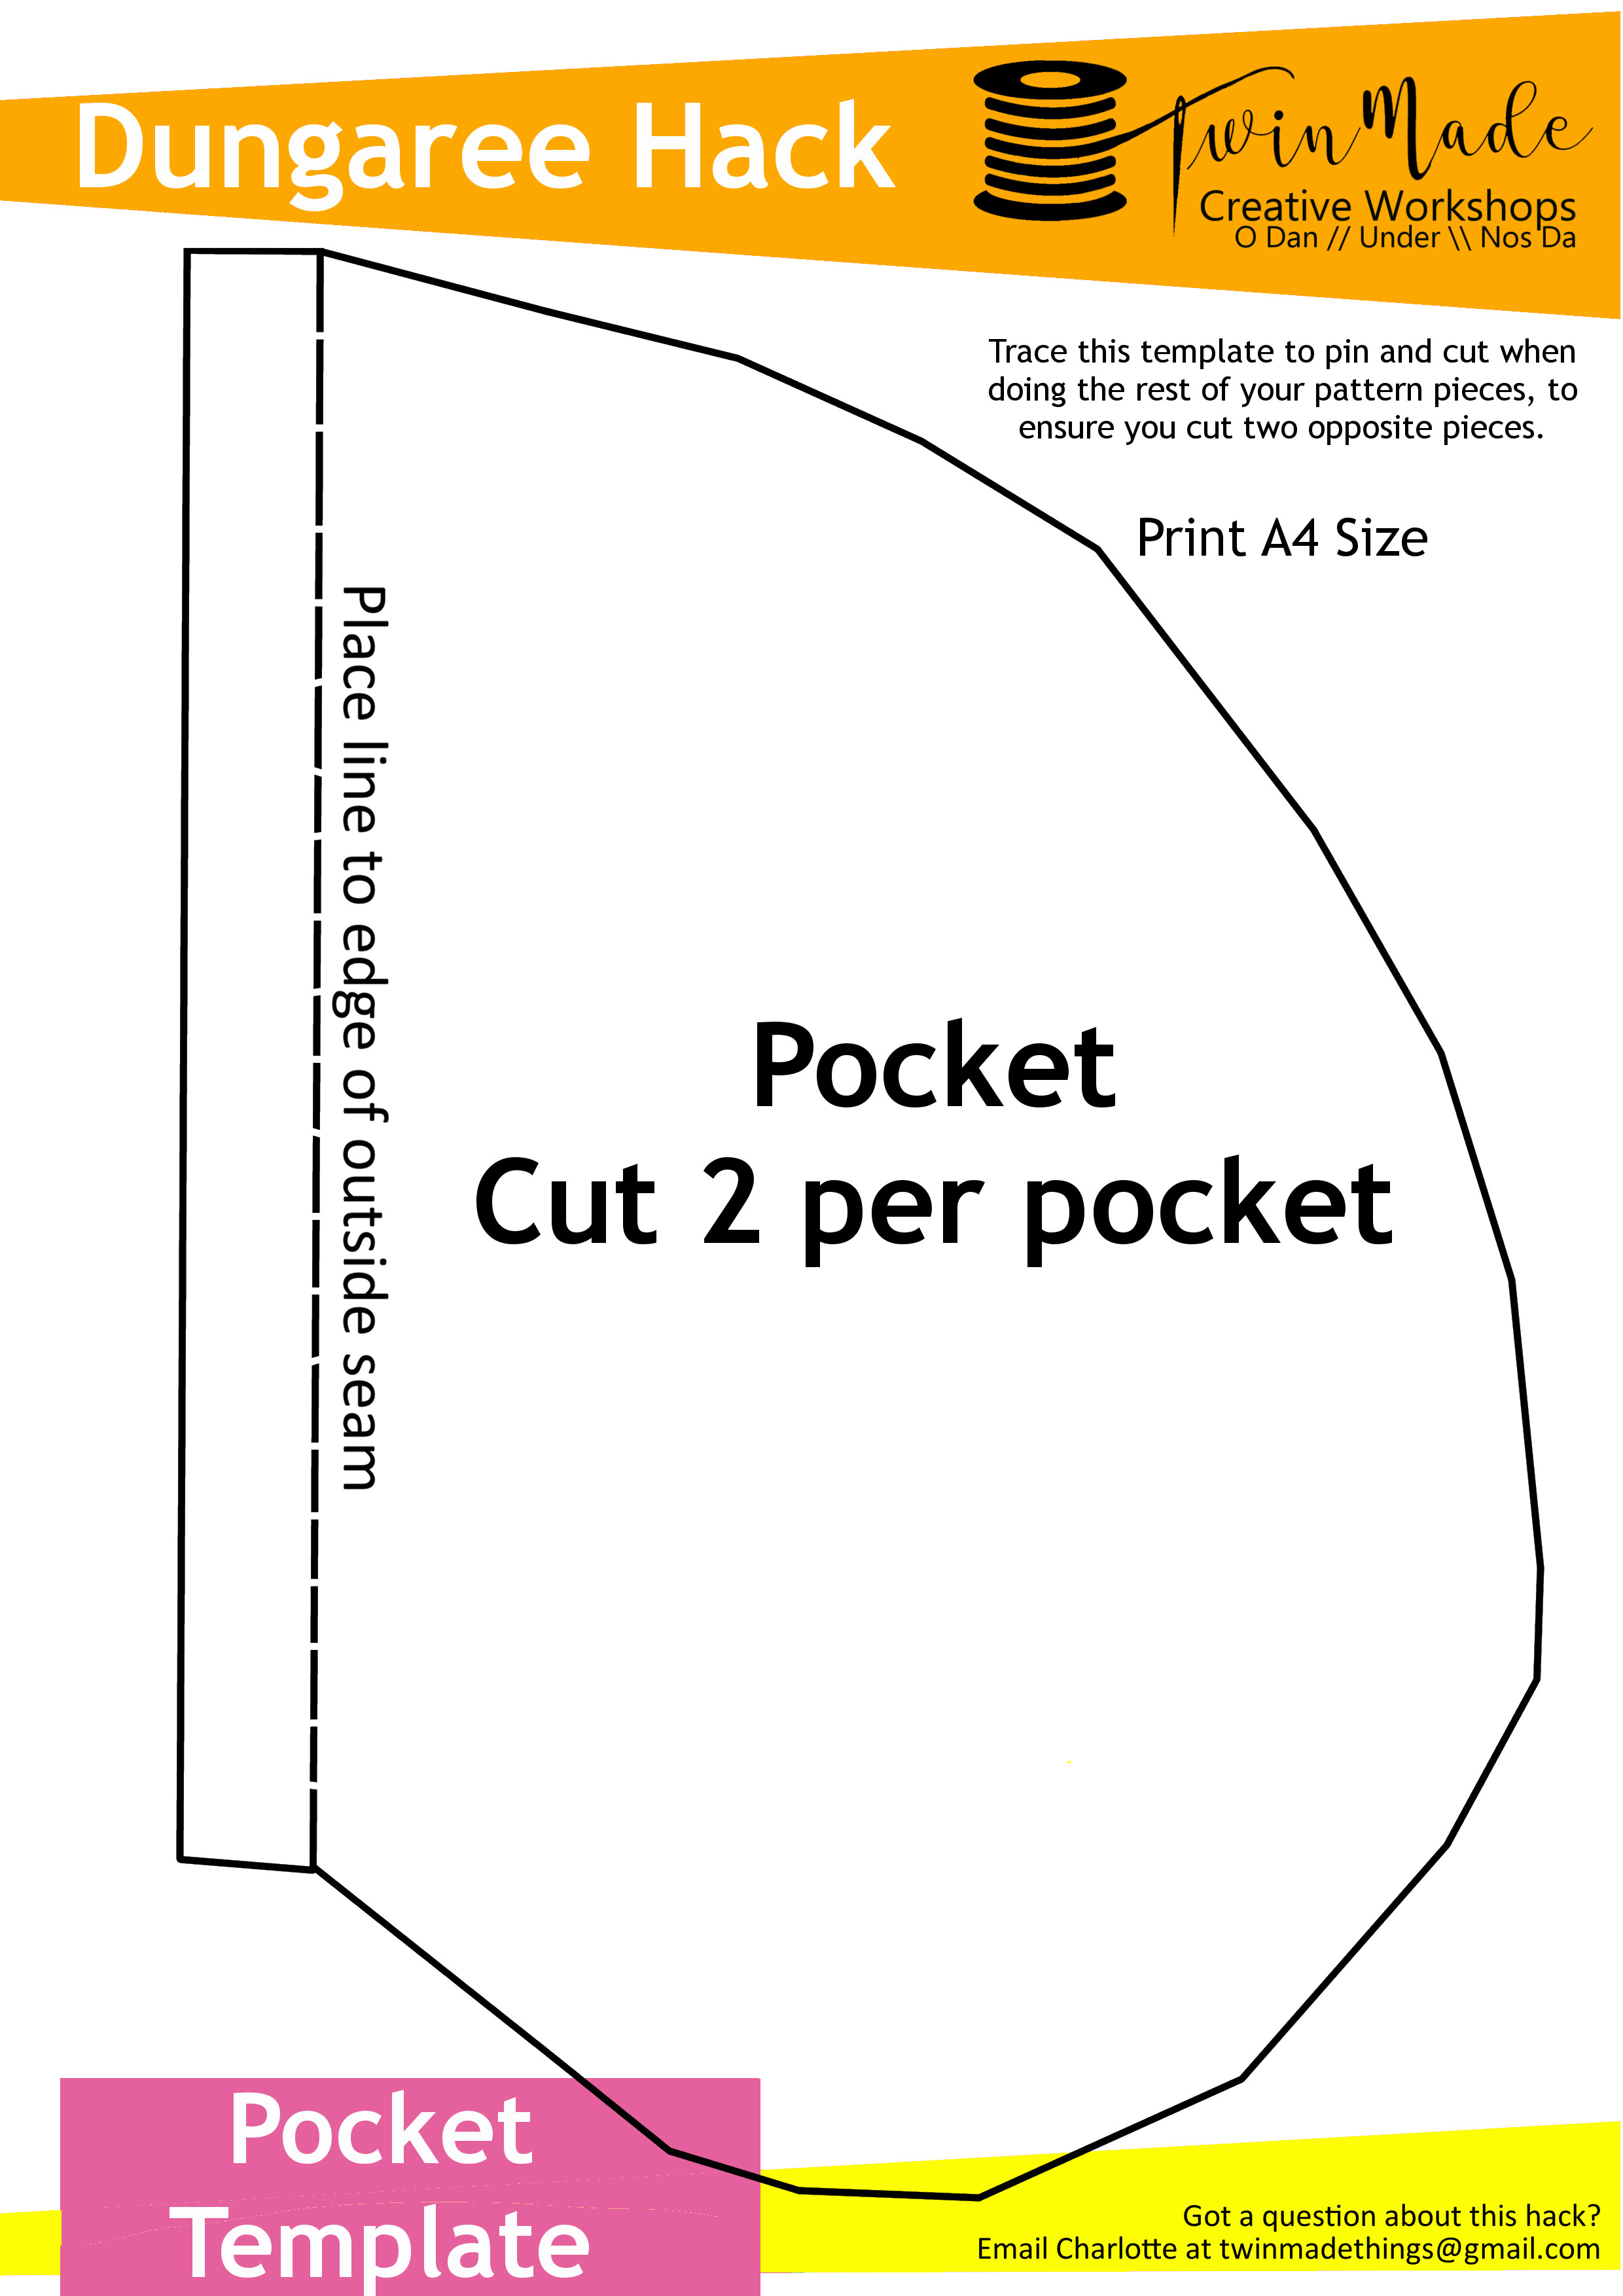 Dungaree Hack Pocket Template.jpg